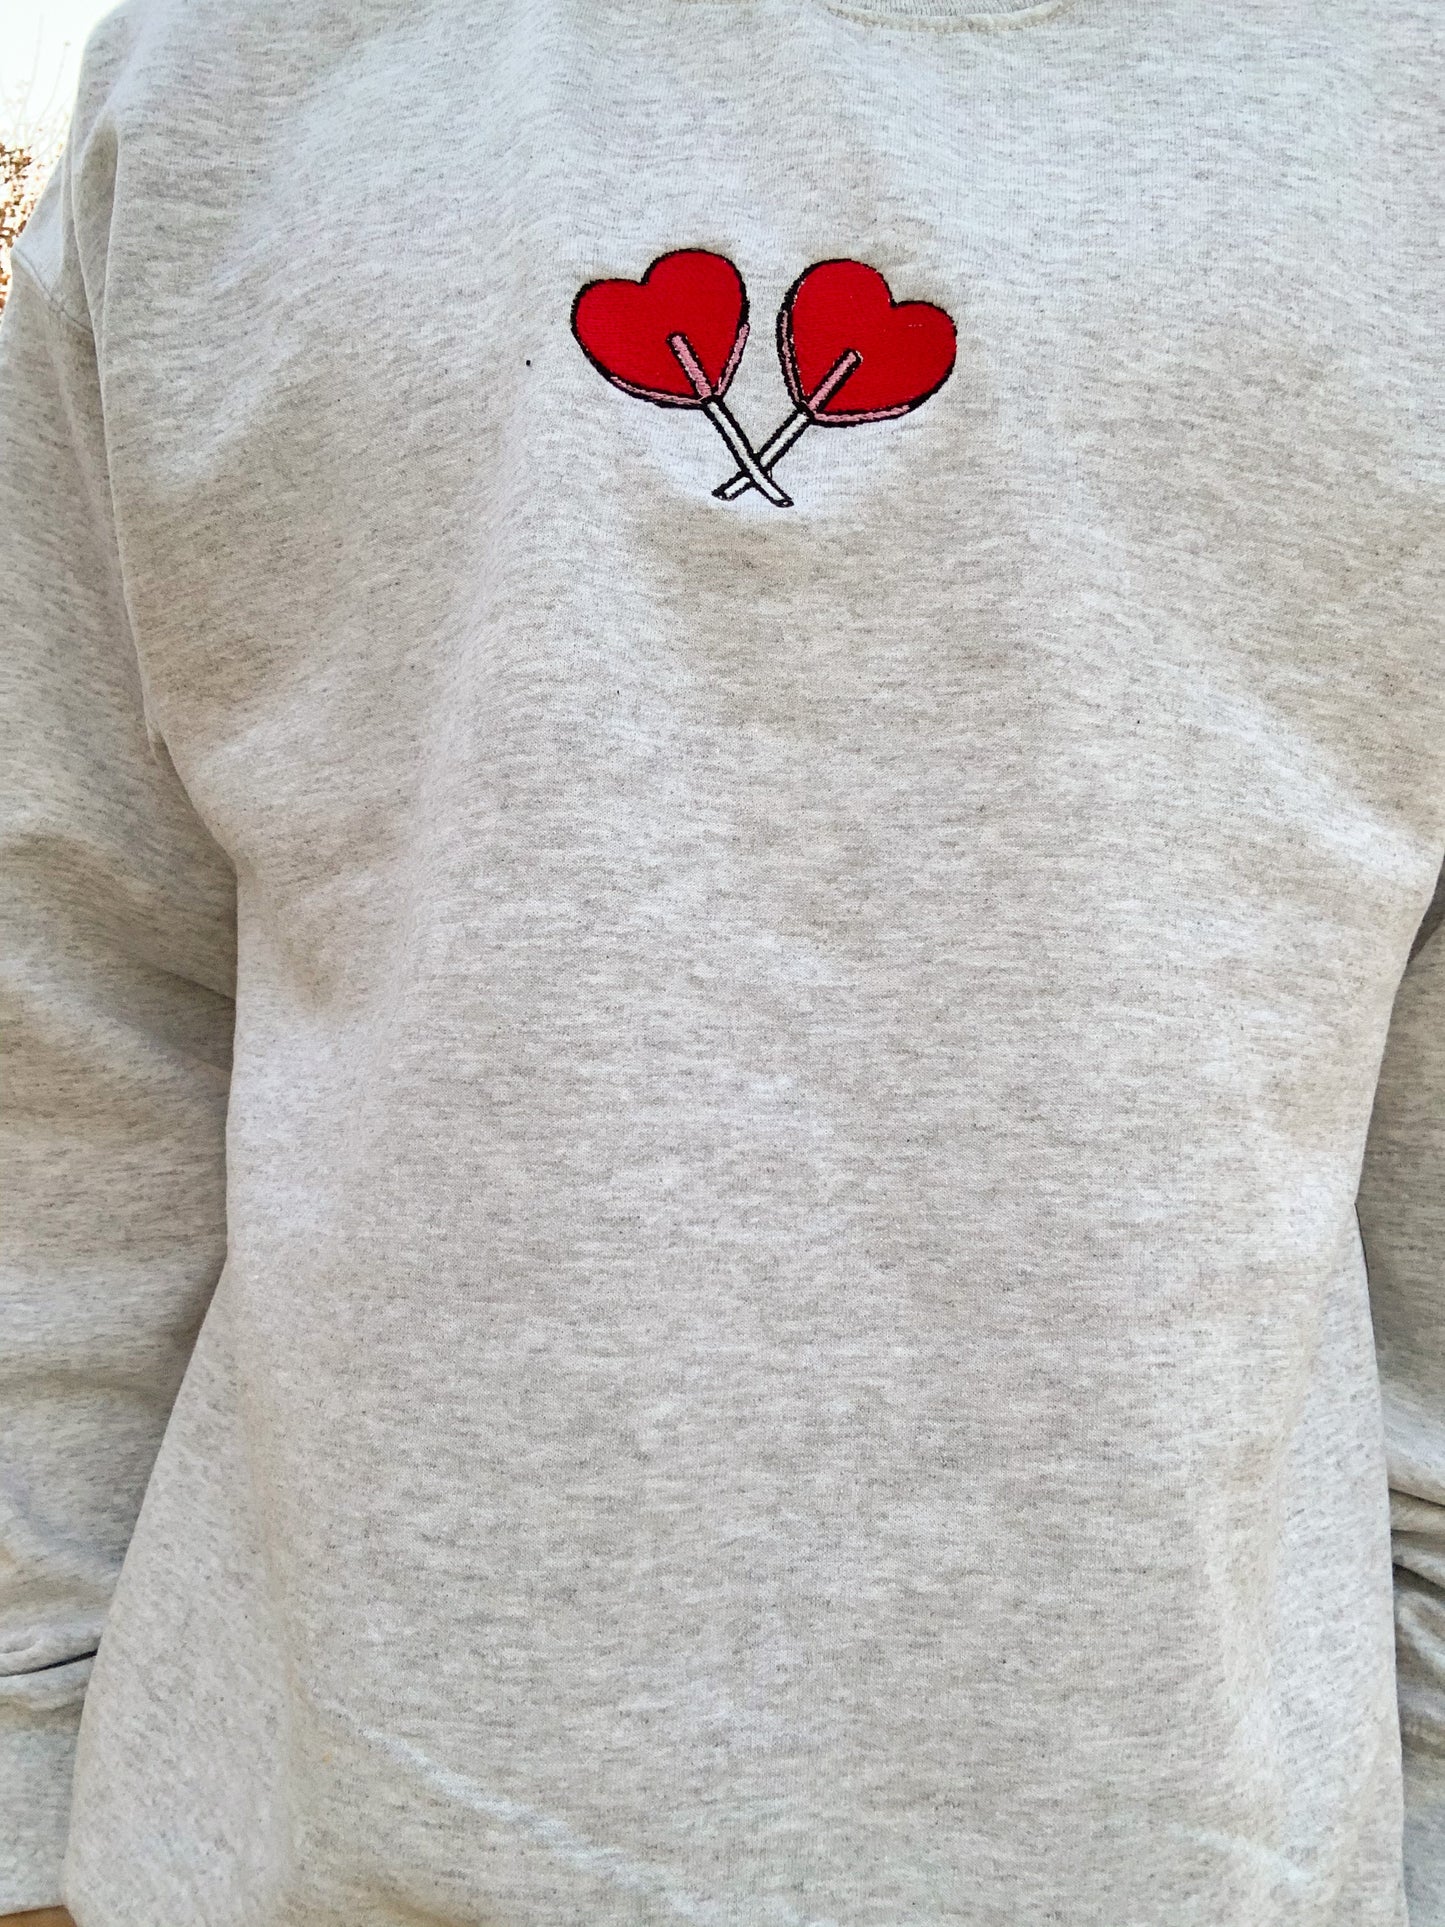 Lollipop Hearts Embroidered Ash Sweatshirt